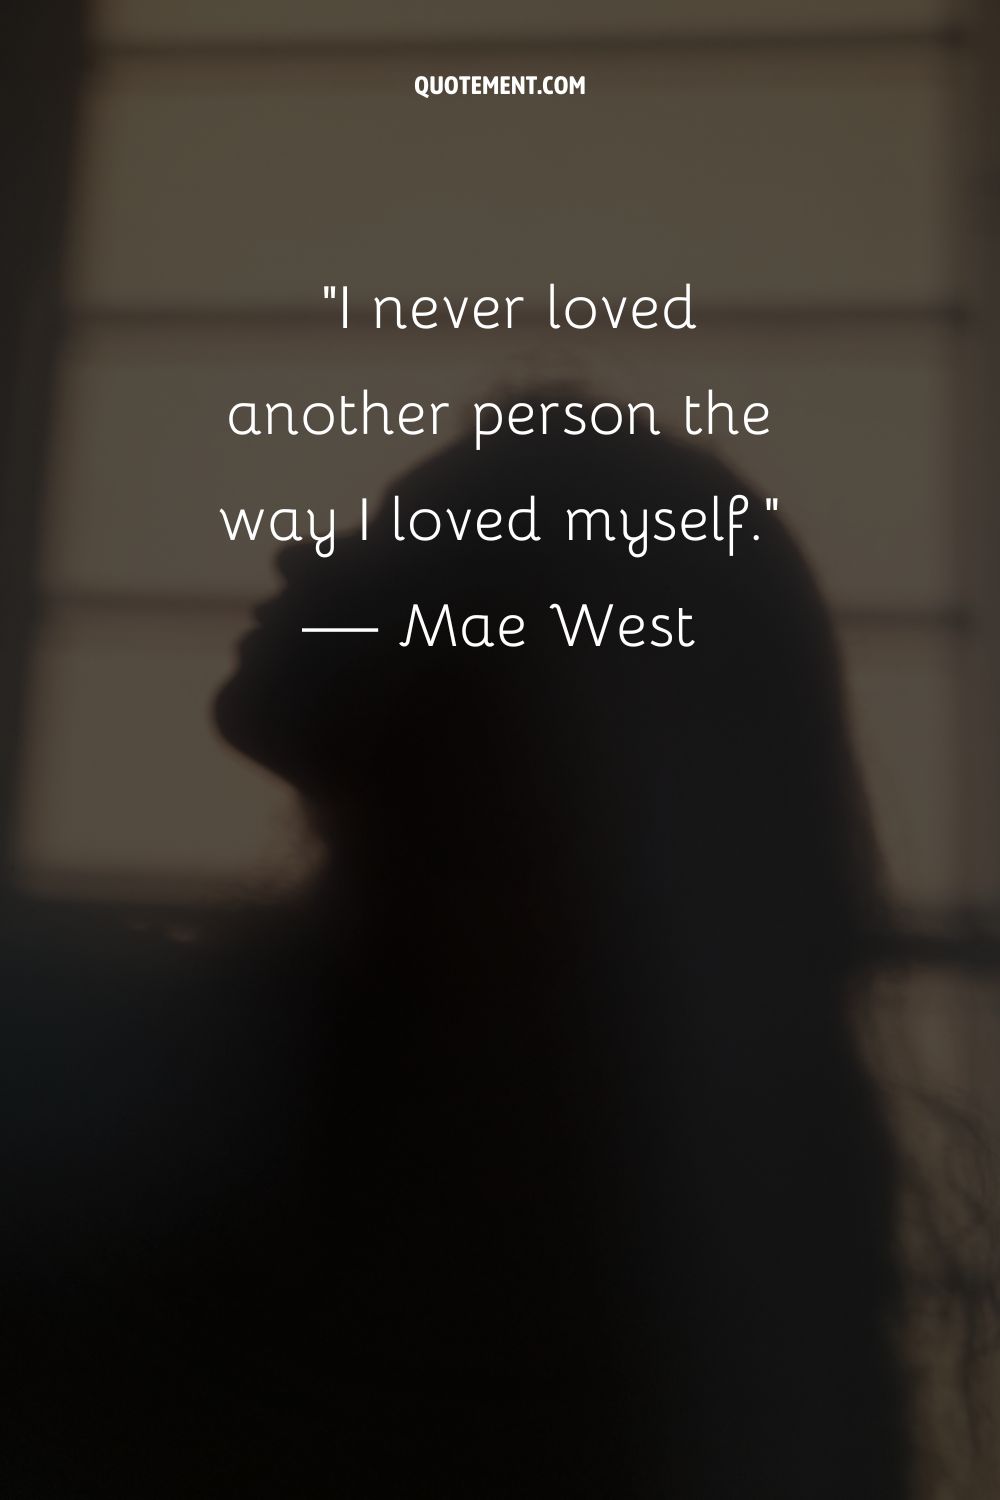 Nunca amé a otra persona como me amaba a mí misma.